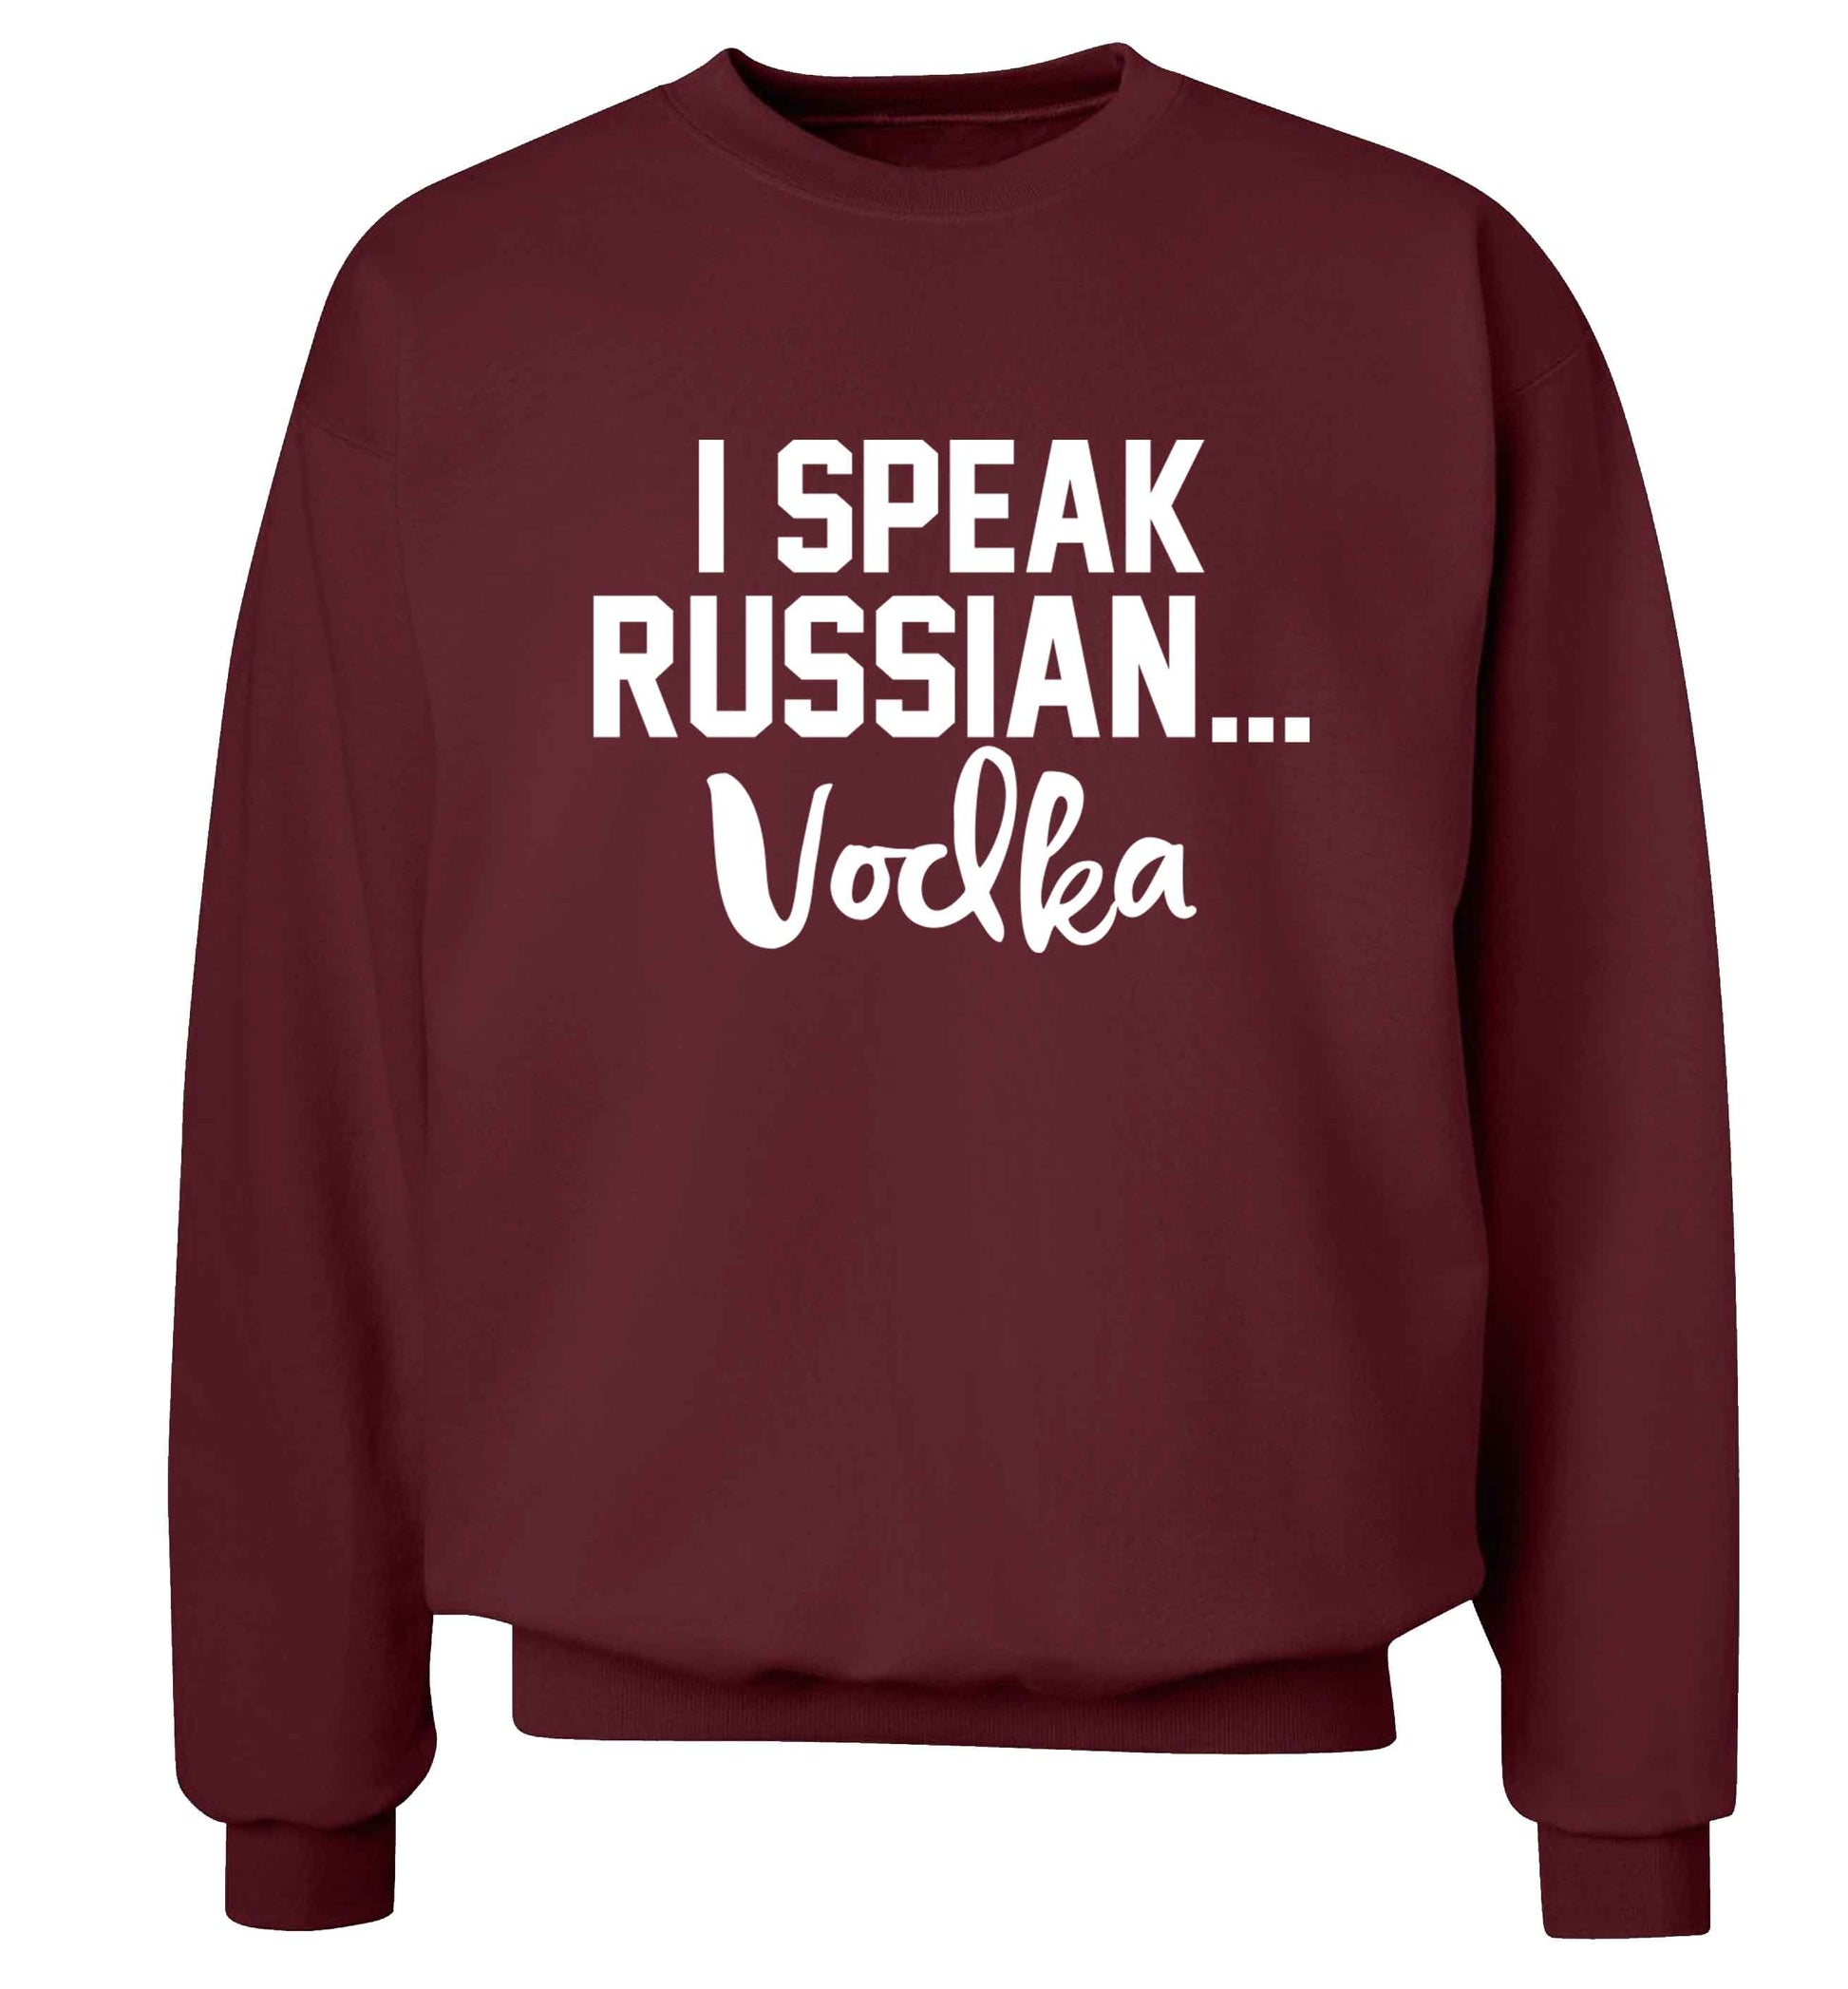 I speak russian...vodka Adult's unisex maroon Sweater 2XL